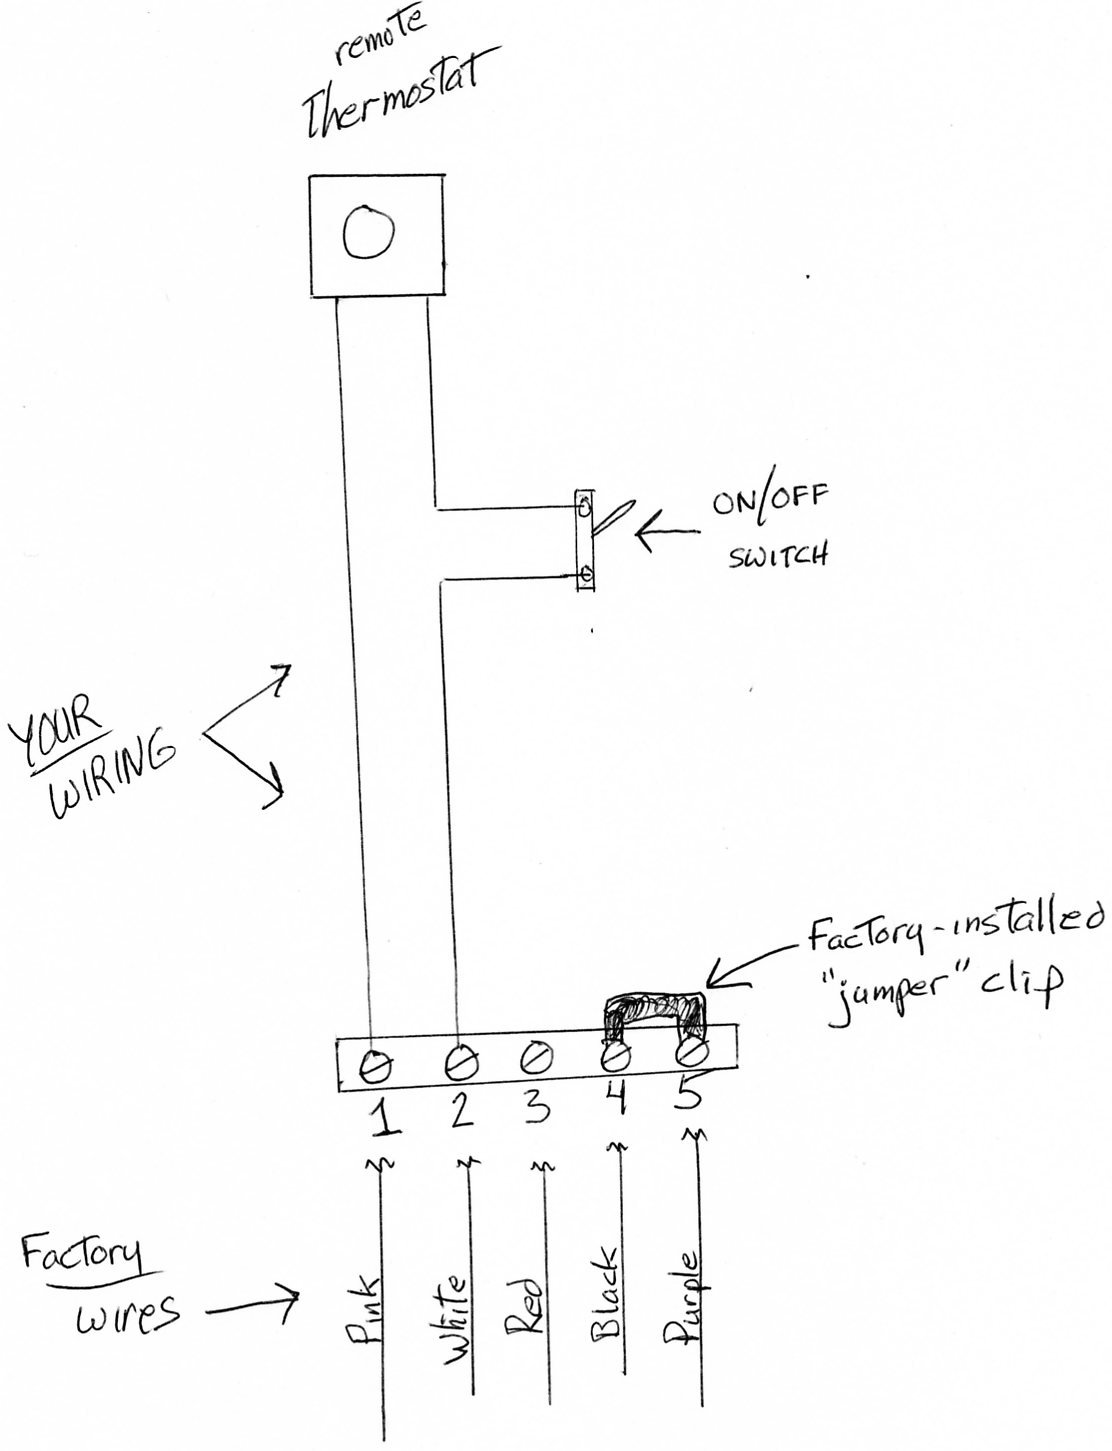 hayward ht100 pool heater wiring diagram